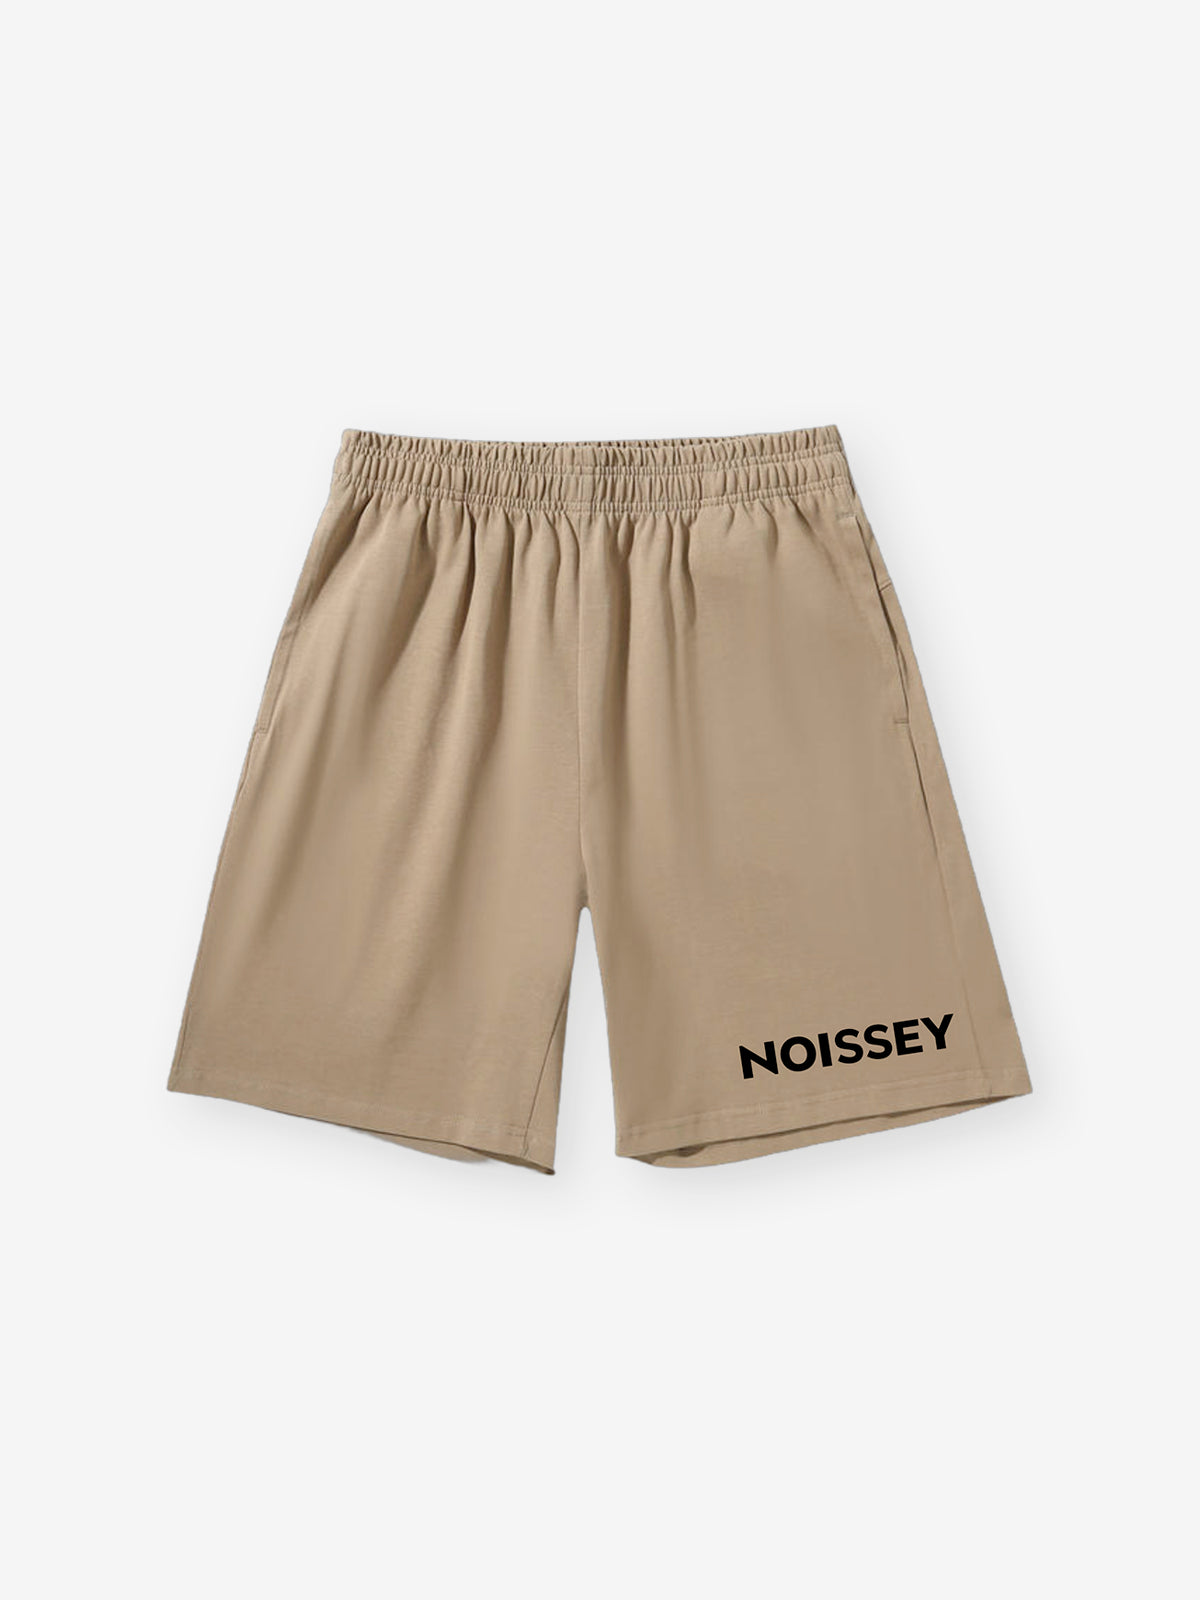 Noissey classic logo high-quality sports shorts